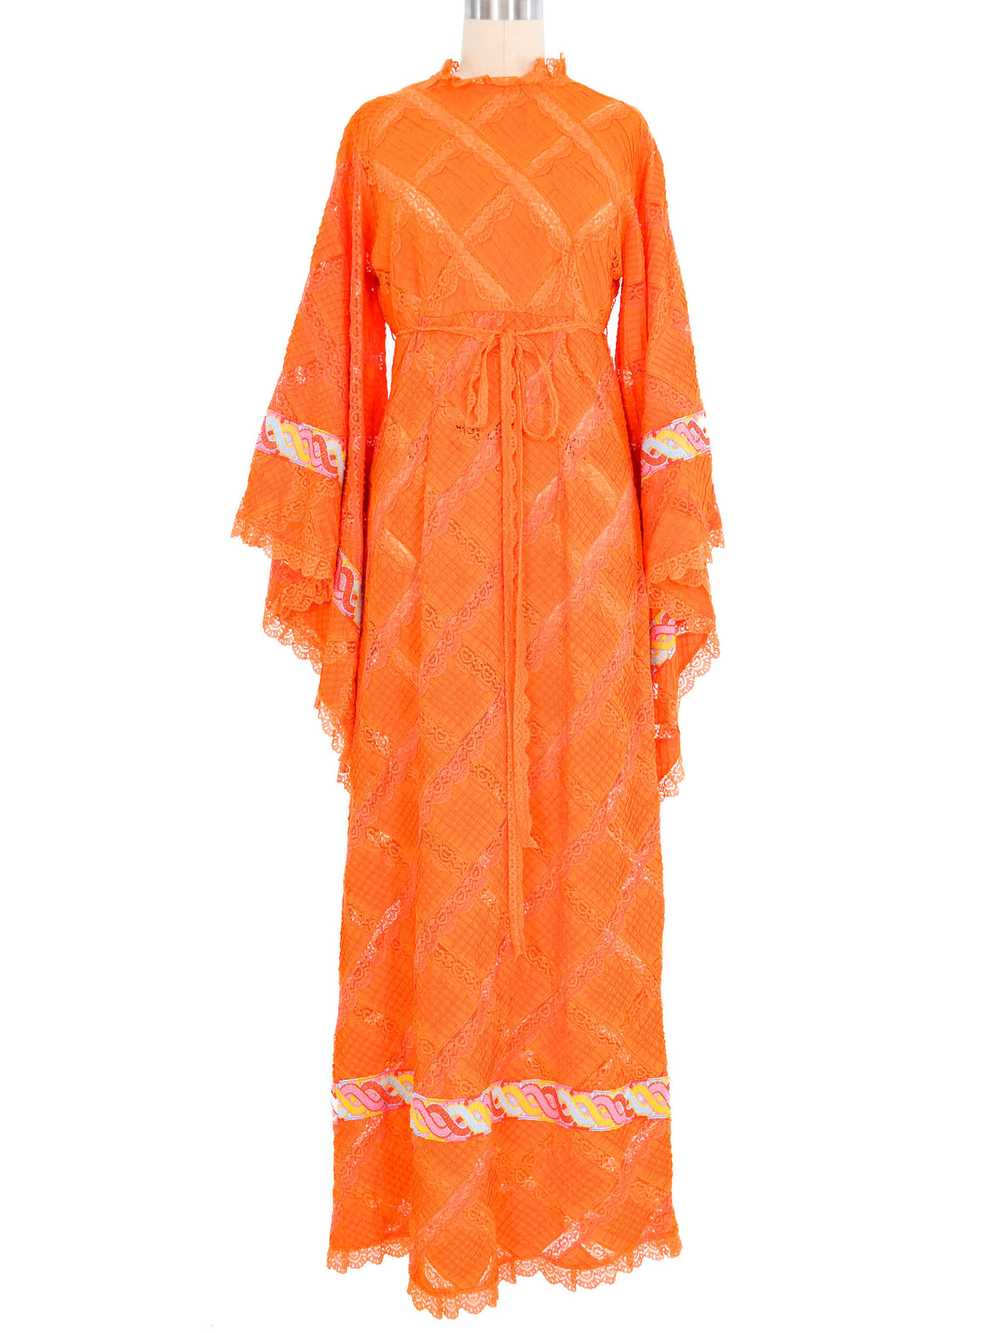 Bright Orange Angel Sleeve Mexican Wedding Dress - image 3